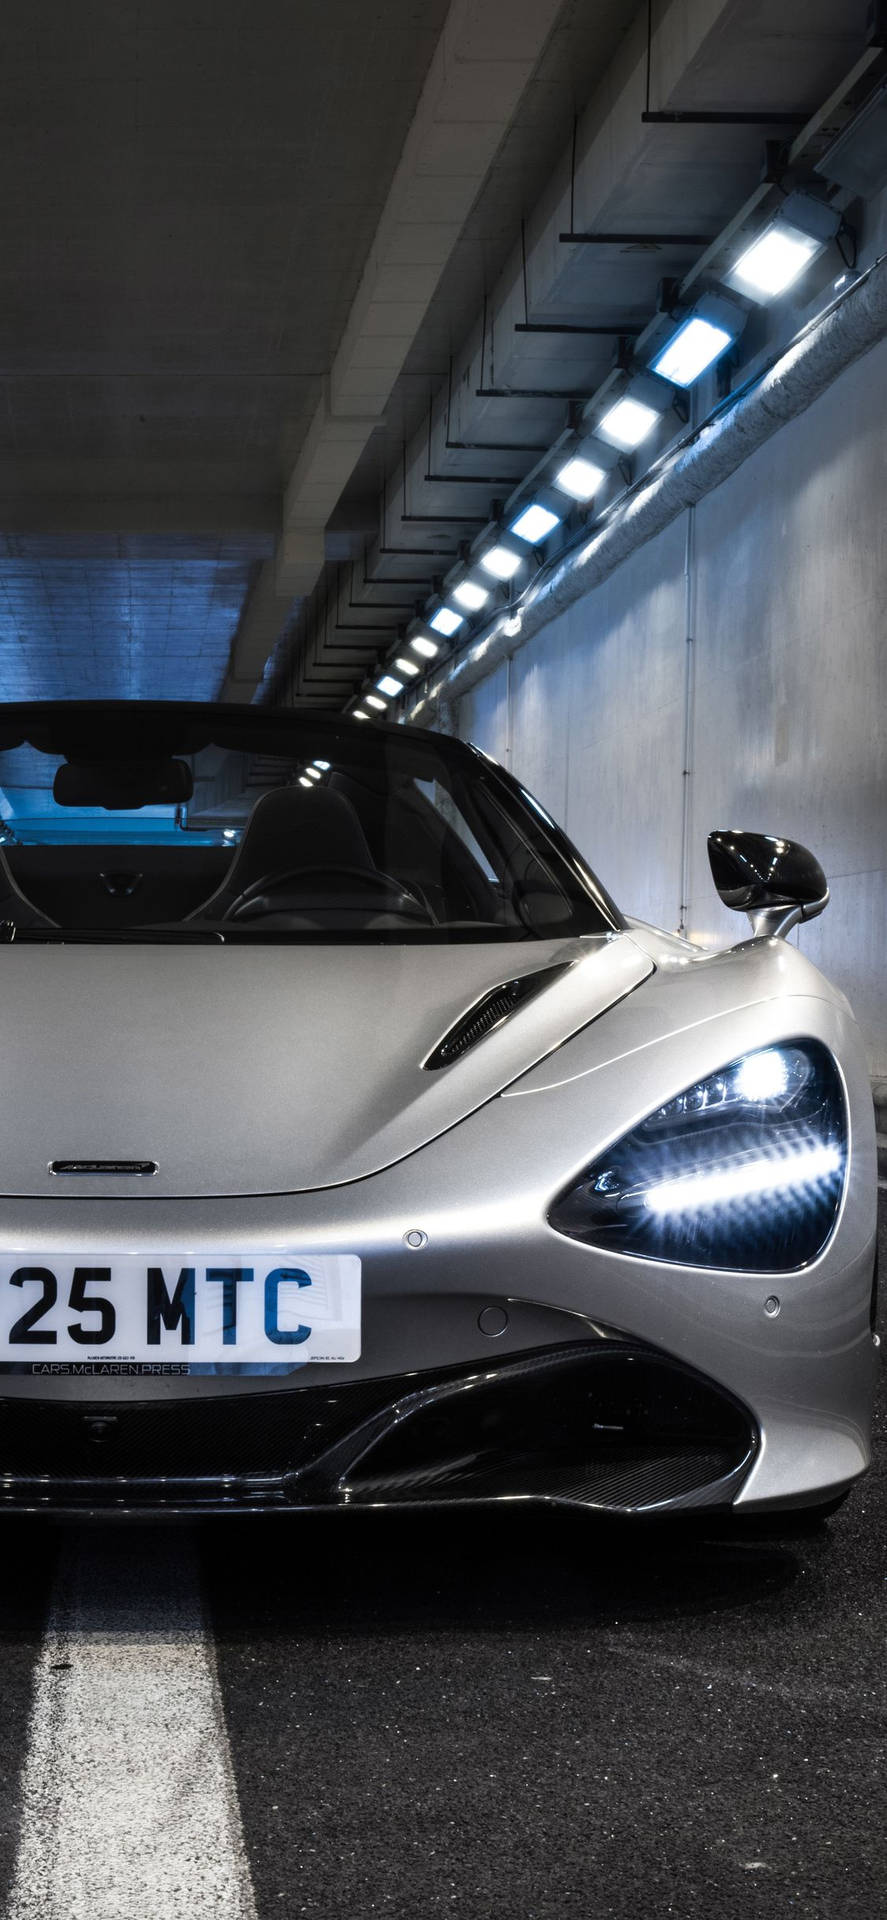 Mclaren 720s White Car In Tunnel Phone Background